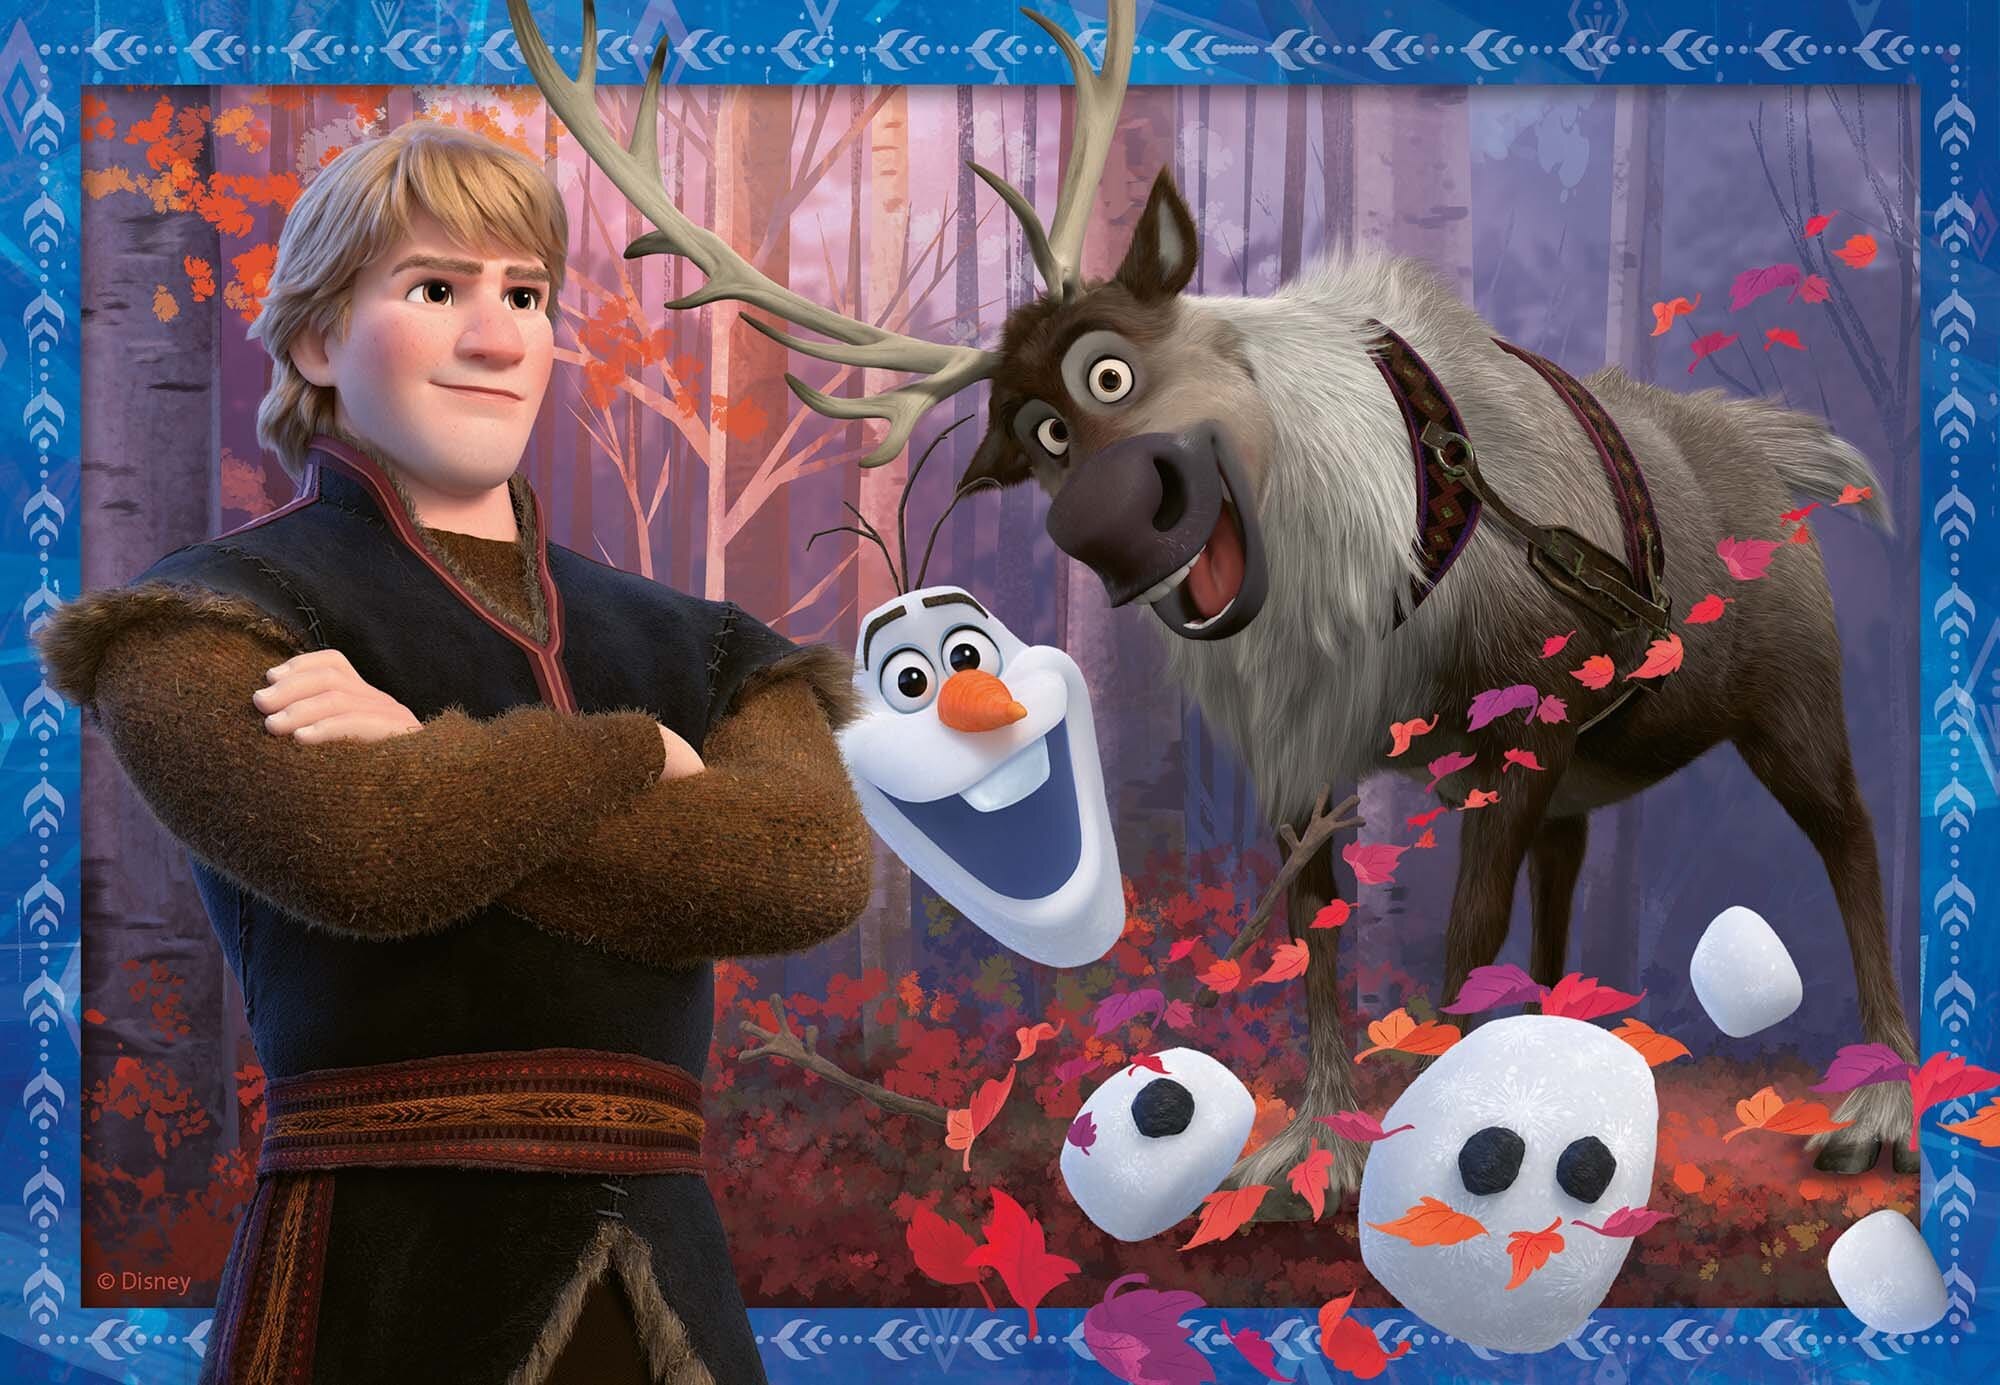 Ravensburger Pussel, Disney - Frozen 2x24 bitar